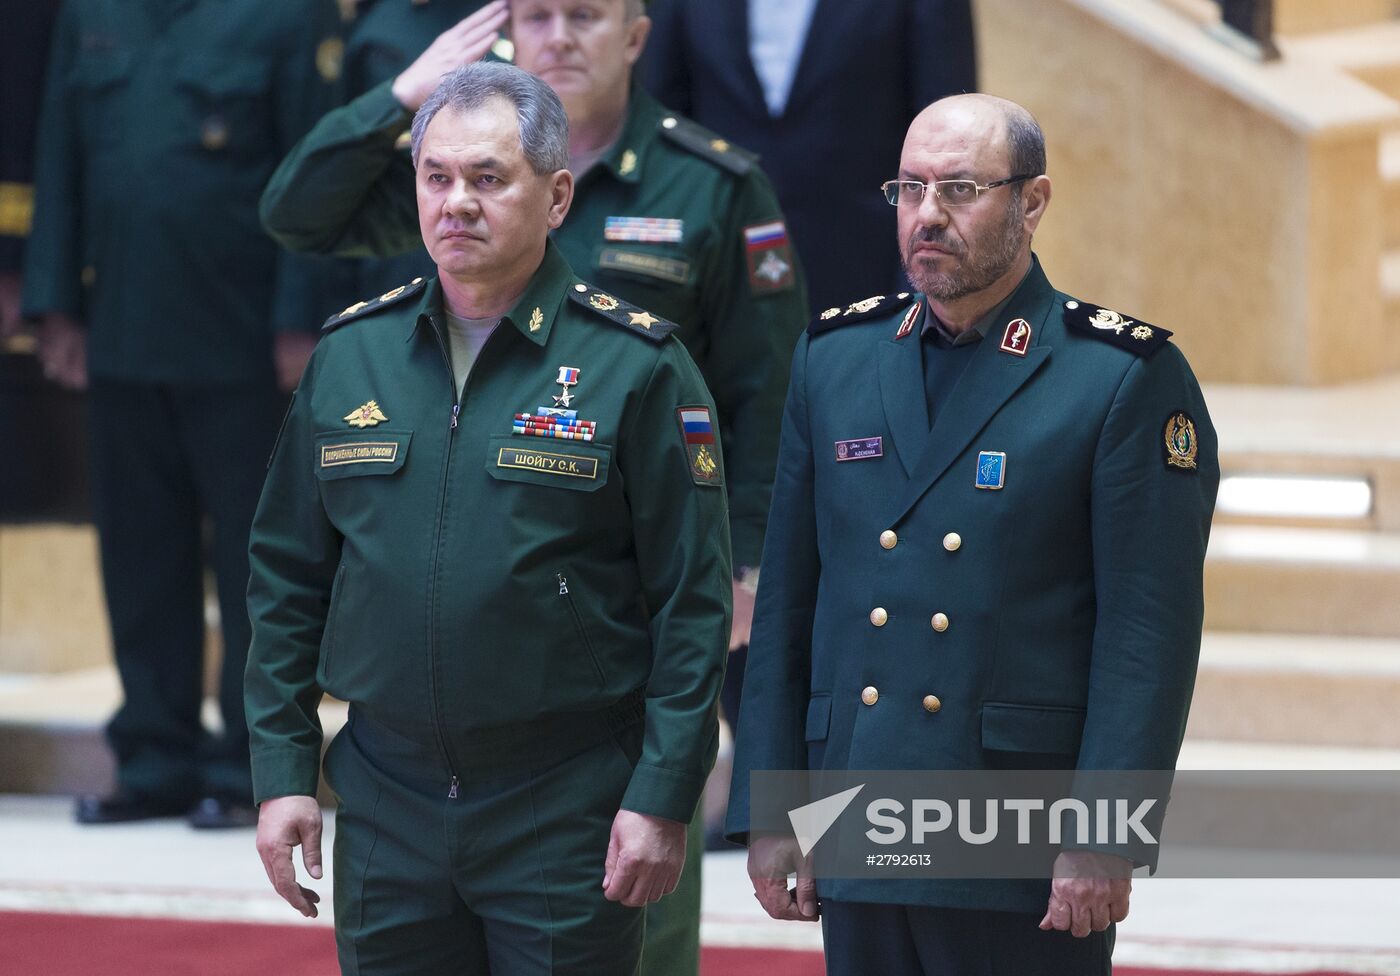 Russian Defense Minister Sergei Shoigu and Iranian Defense Minister Hossein Dehghan meet in Moscow